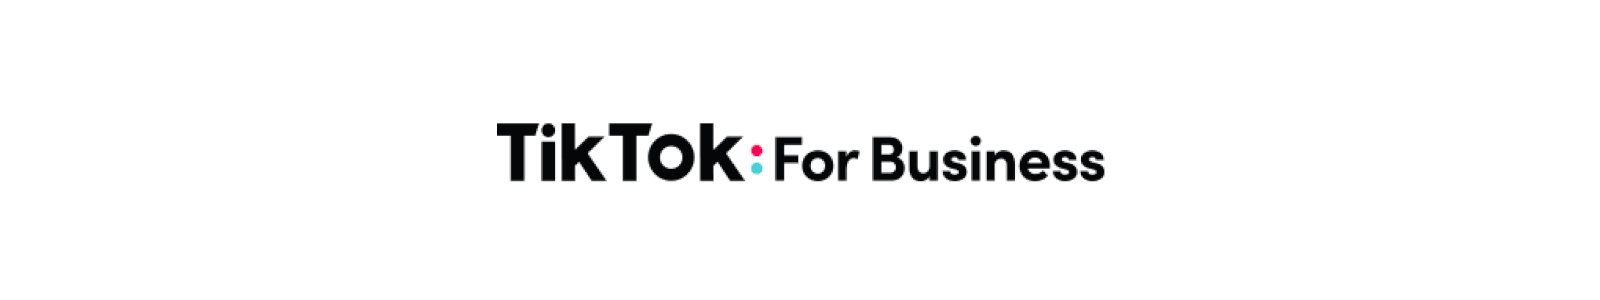 TikTok for Business ロゴ